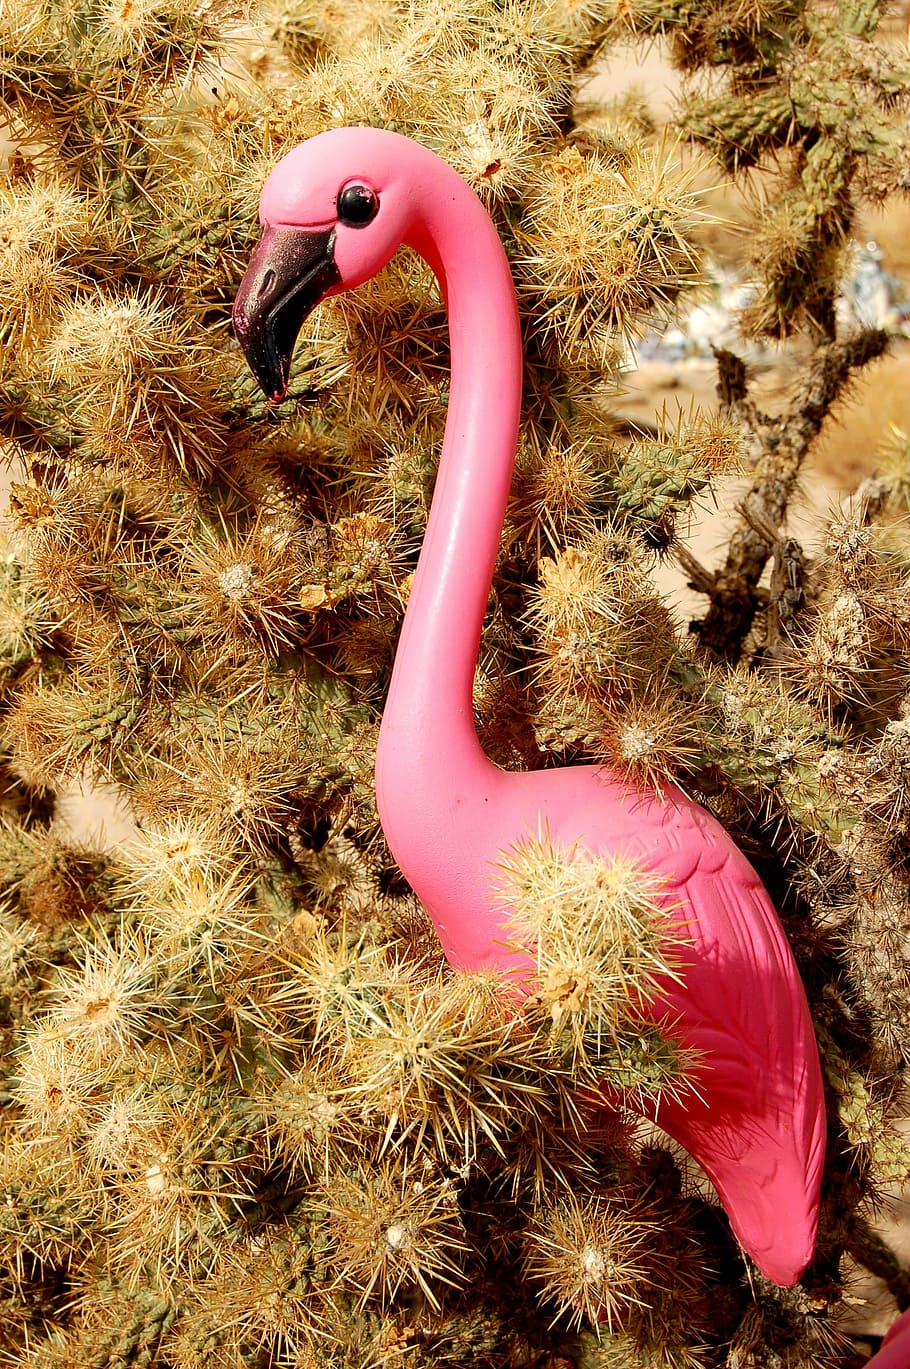 pink plastic flamingo on cactus plant, pink flamingo toy, spikes